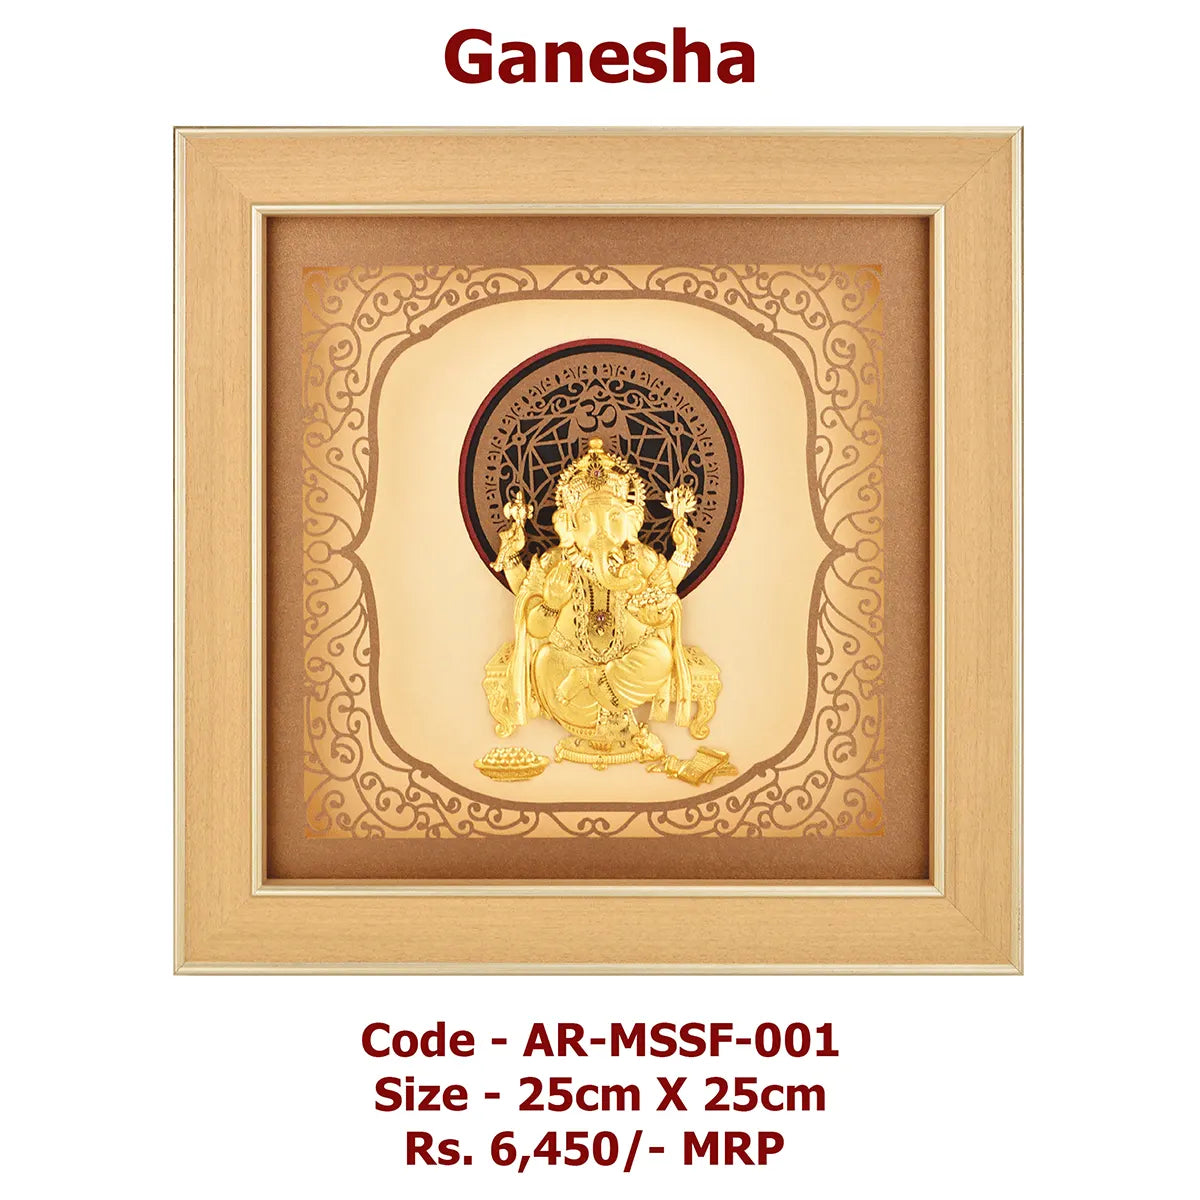 Ganesha Frame 25cm x 25cm size